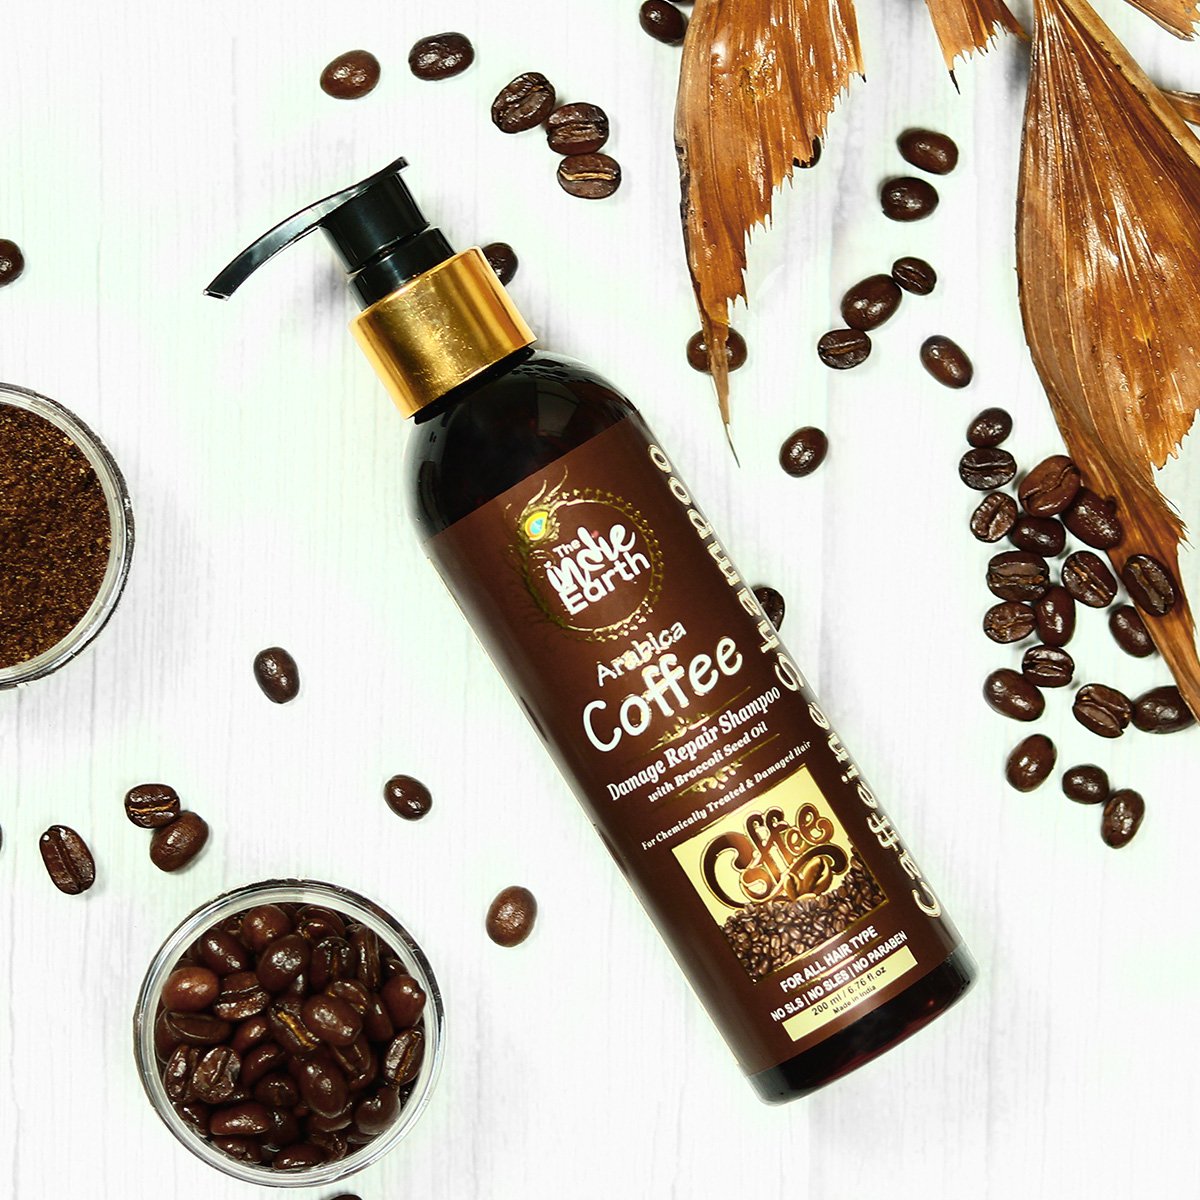 Arabica-Coffee-Shampoo